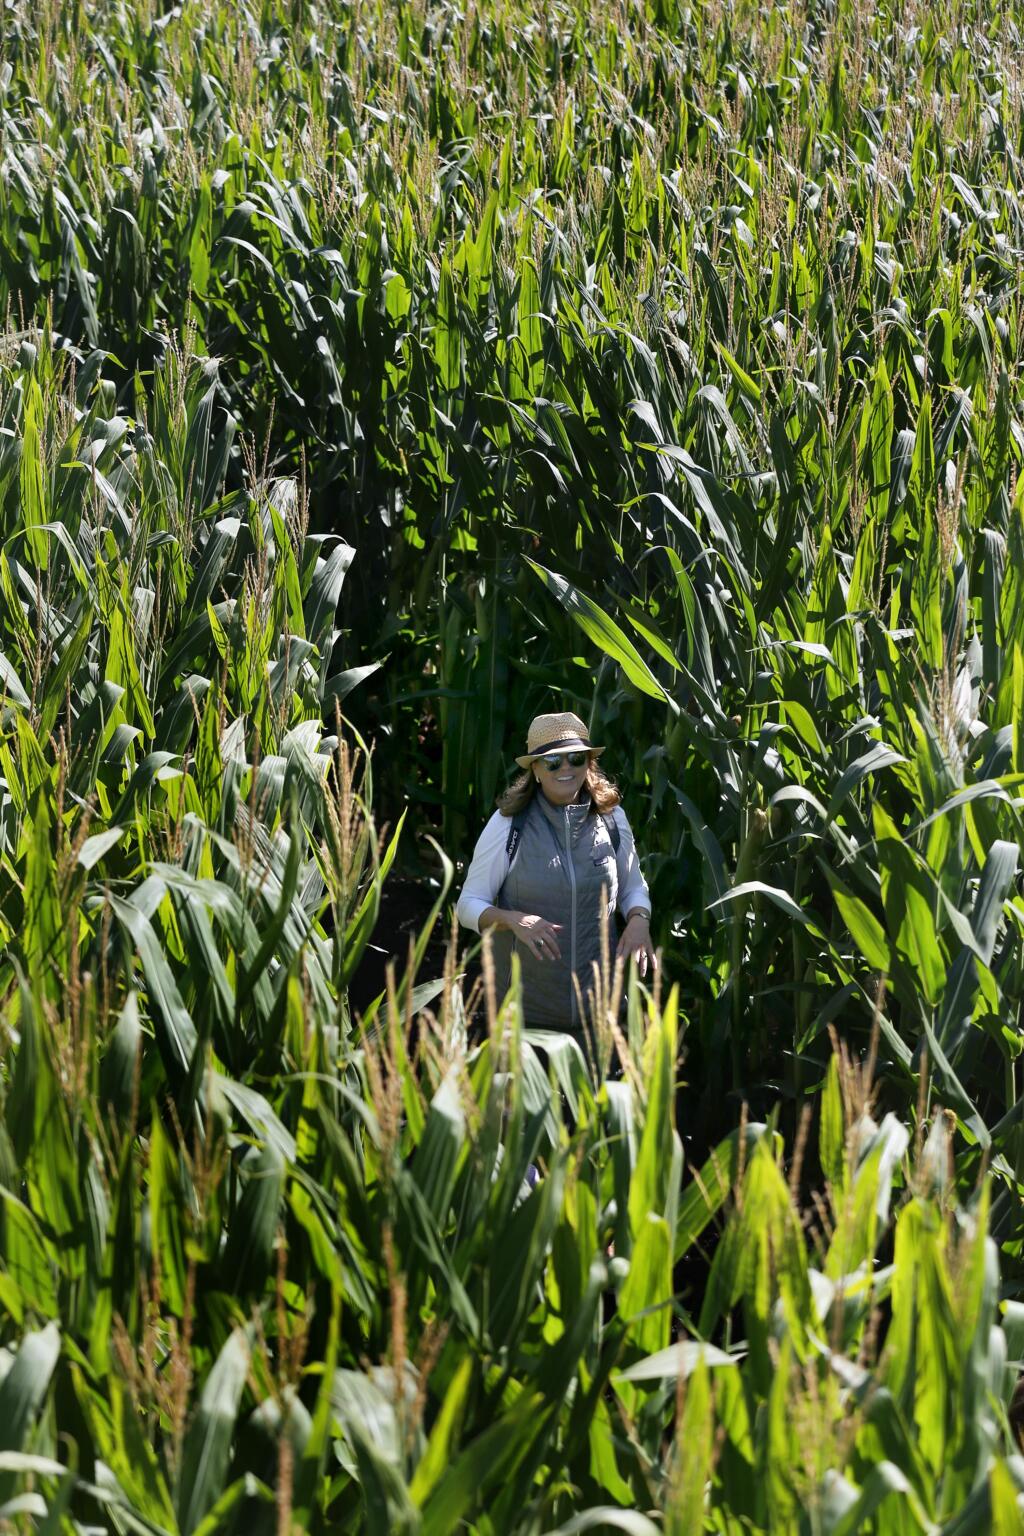 Rosemary Silverman walks through the corn maze at the Petaluma Pumpkin Patch and Amazing Corn Maze in Petaluma, California on Thursday, October 3, 2019. (BETH SCHLANKER/The Press Democrat)